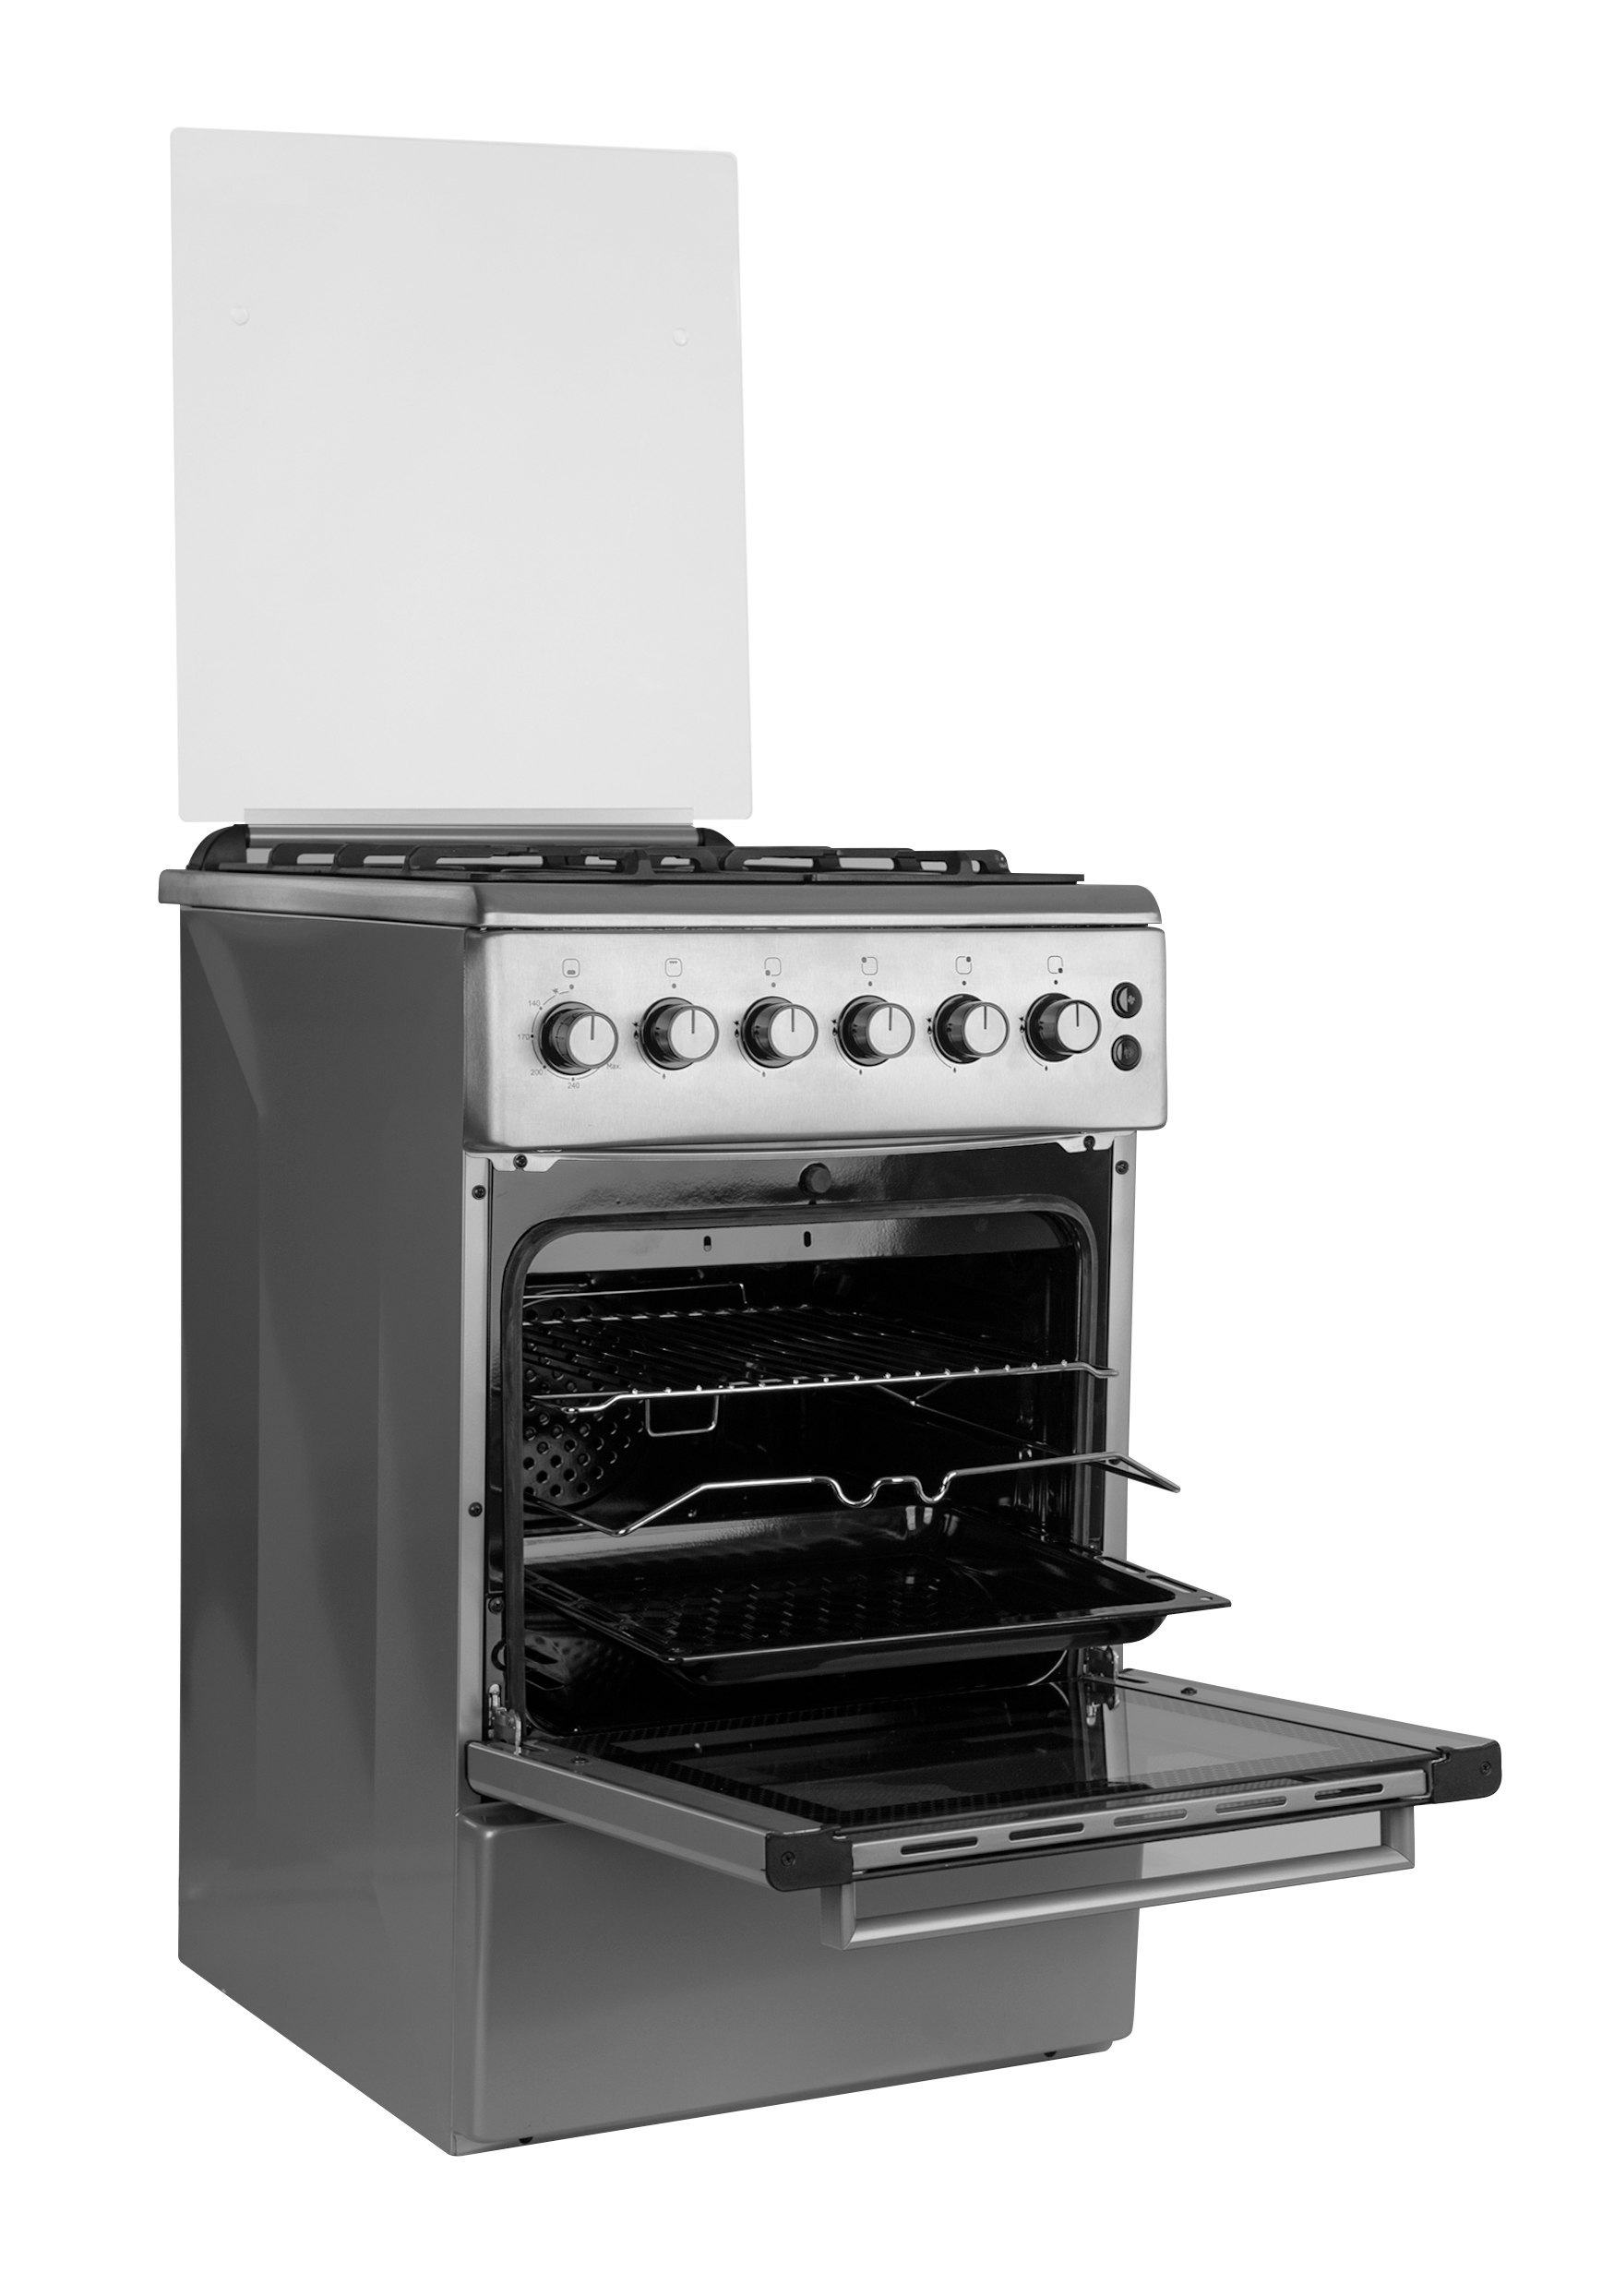 Кухонная плита Fiesta G 5403 SICLtw-SS характеристики - фотография 7